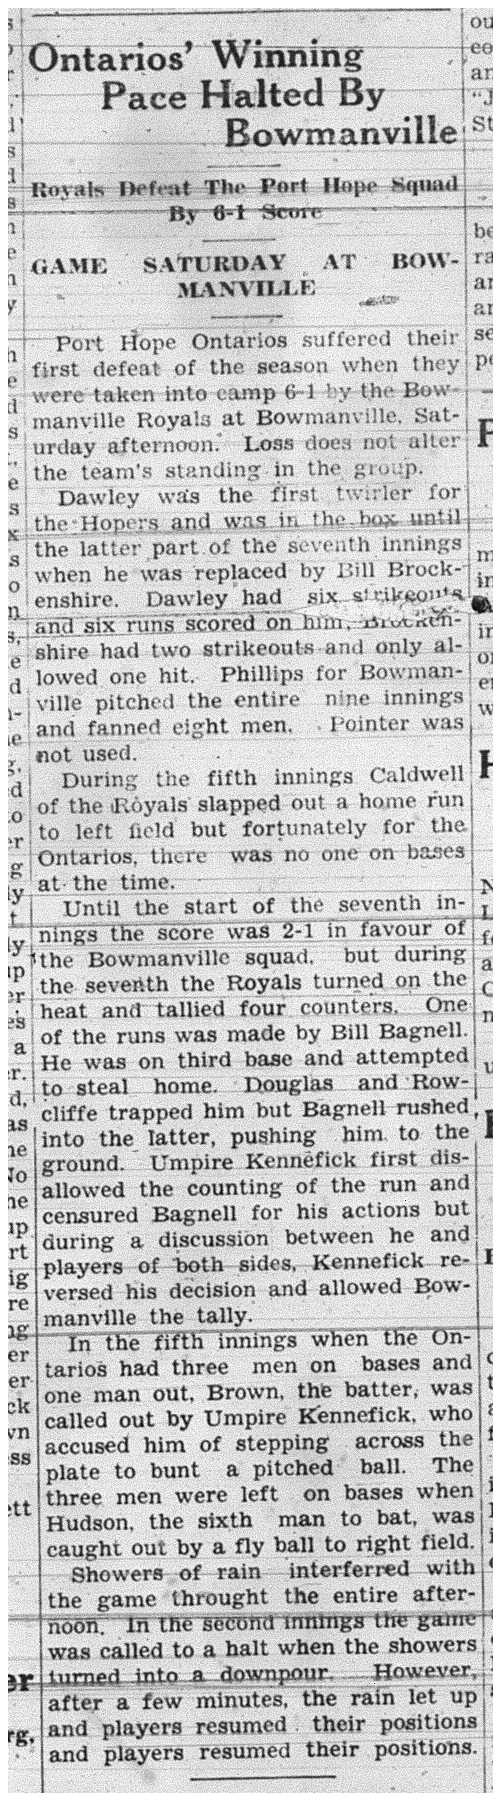 1938-06-09 Baseball -PH vs Bowmanville